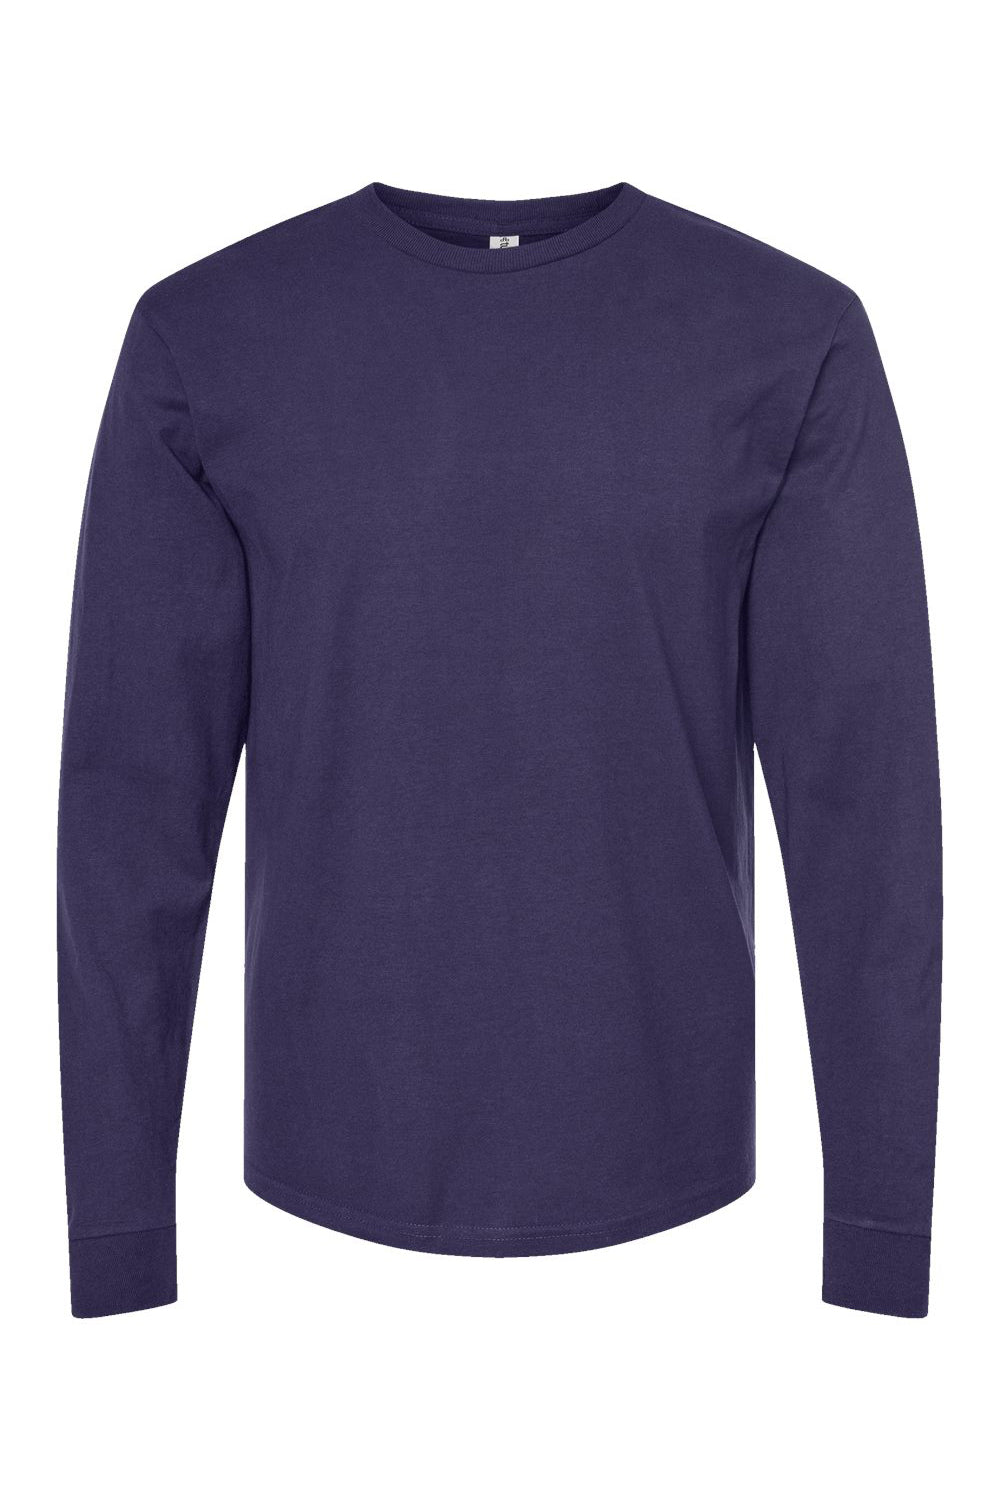 Tultex 291 Mens Jersey Long Sleeve Crewneck T-Shirt Inked India Blue Flat Front